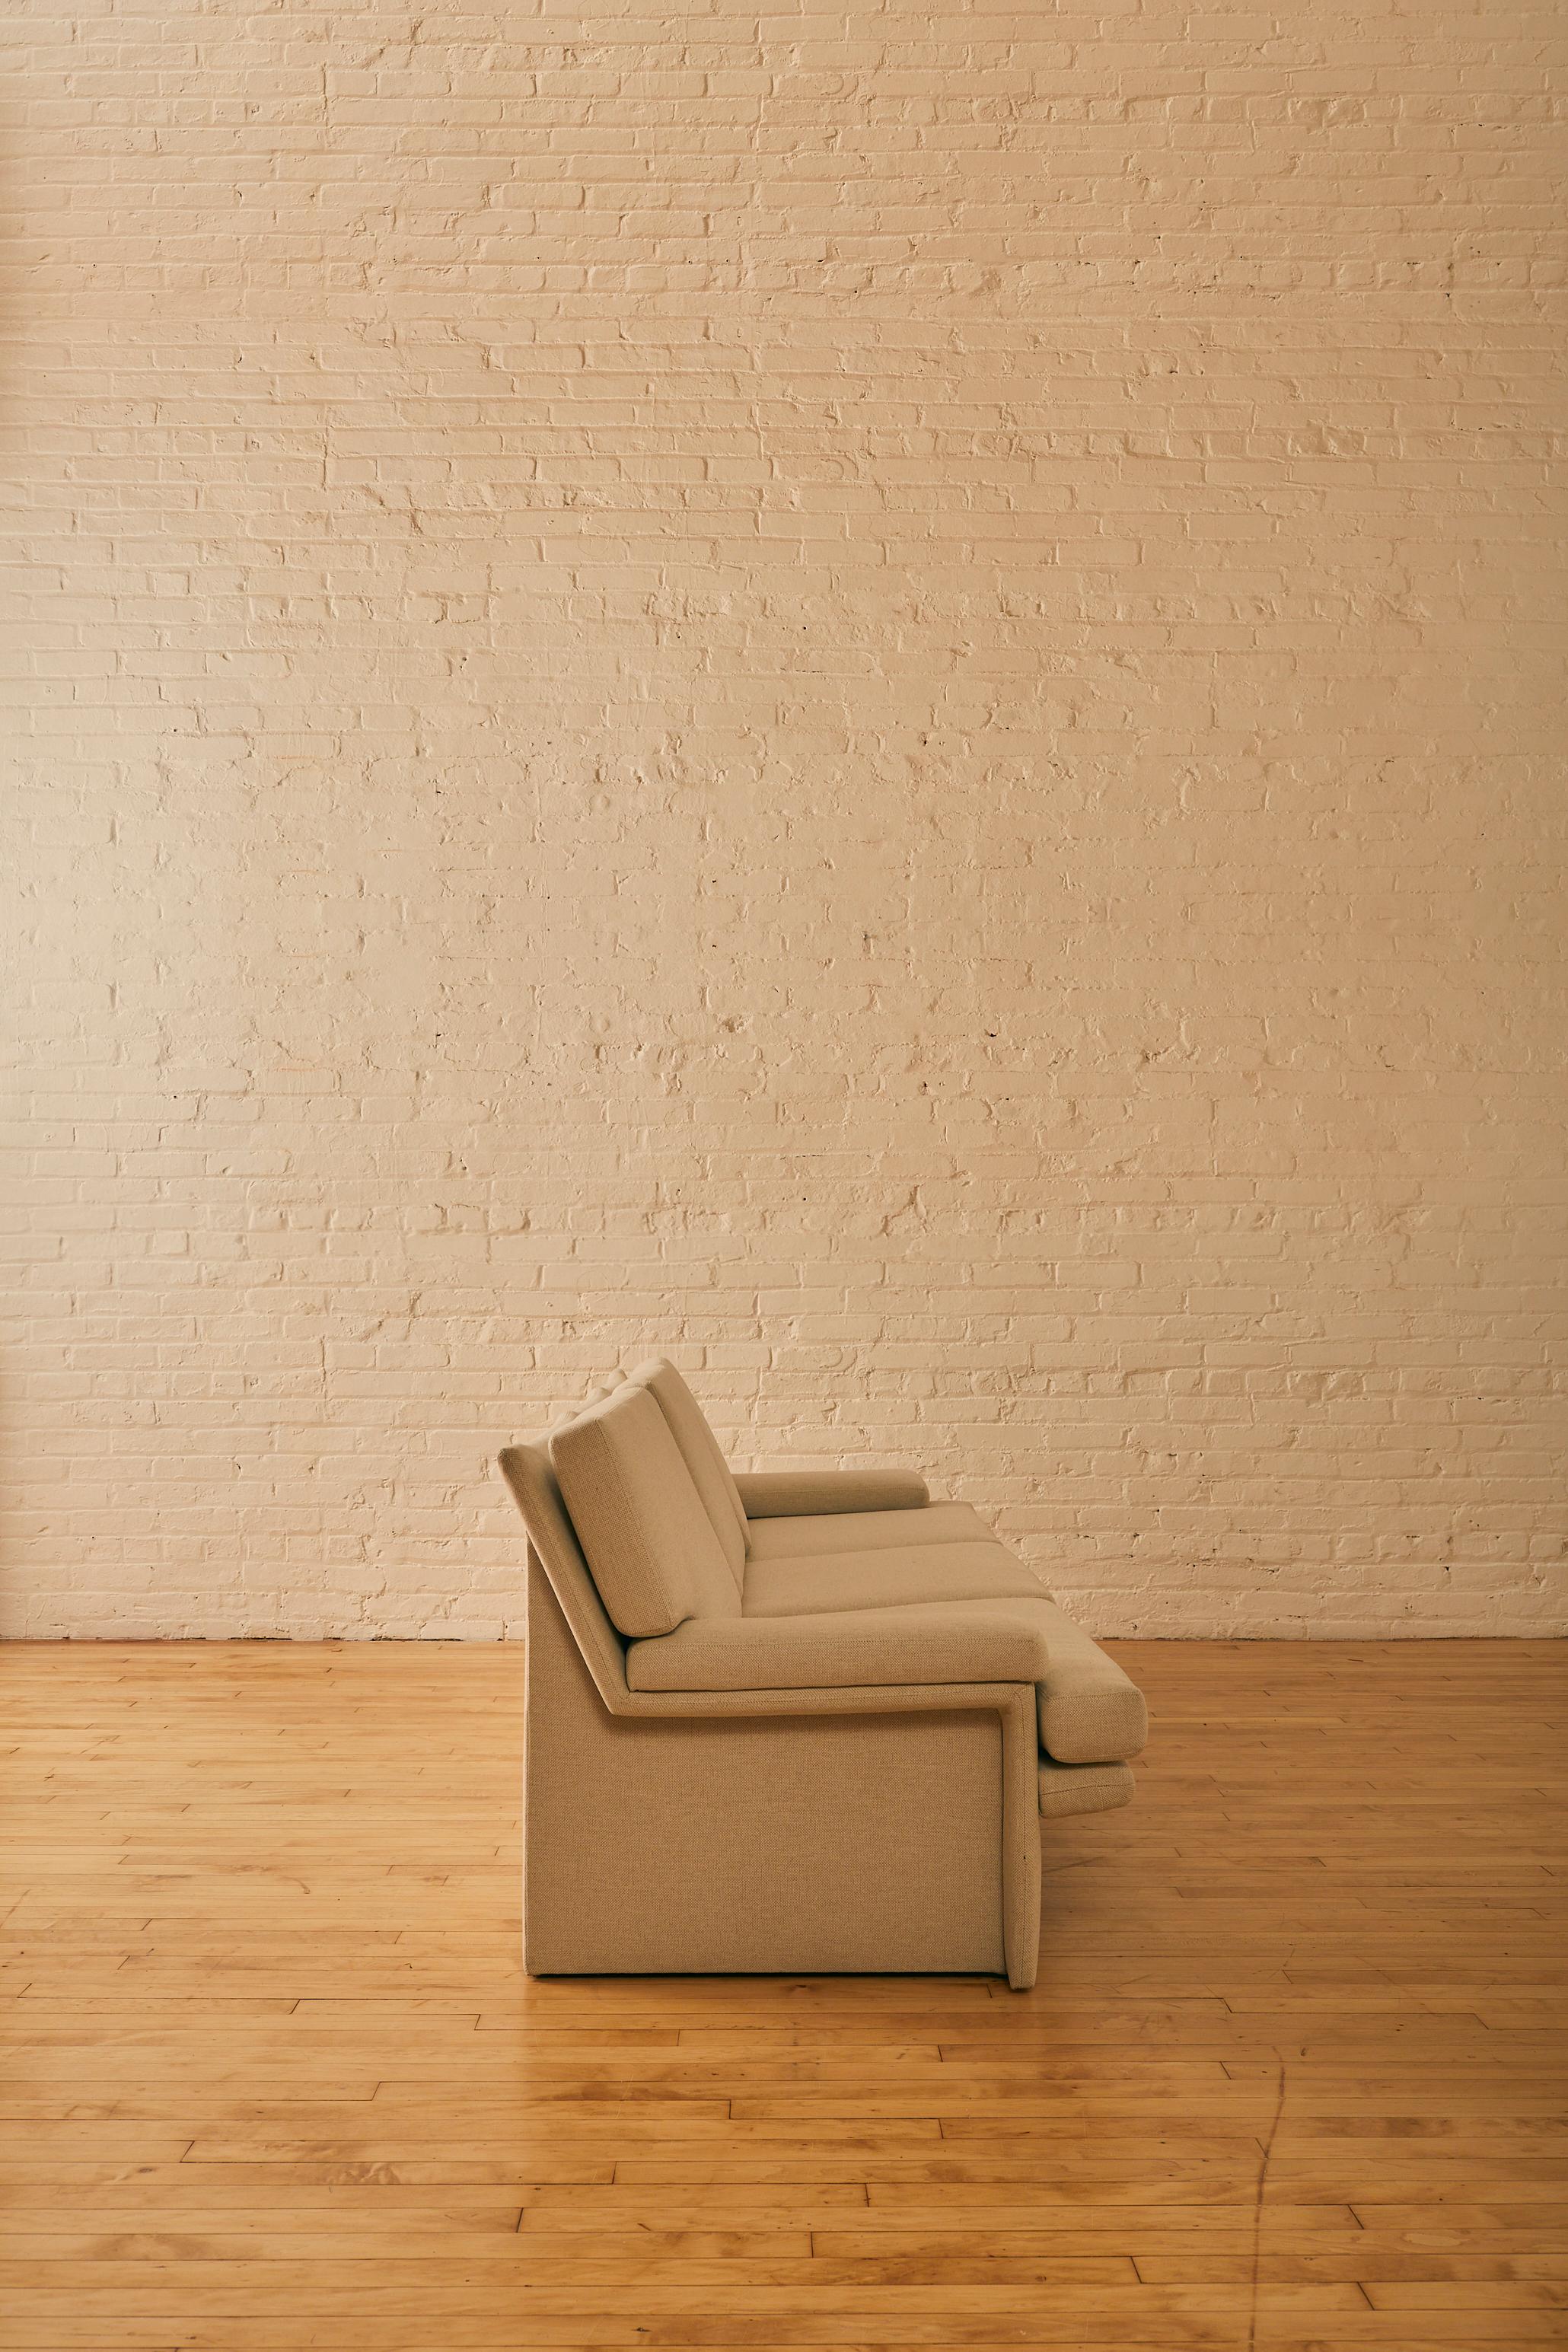 20th Century Rectangular Modernist Sofa For Sale